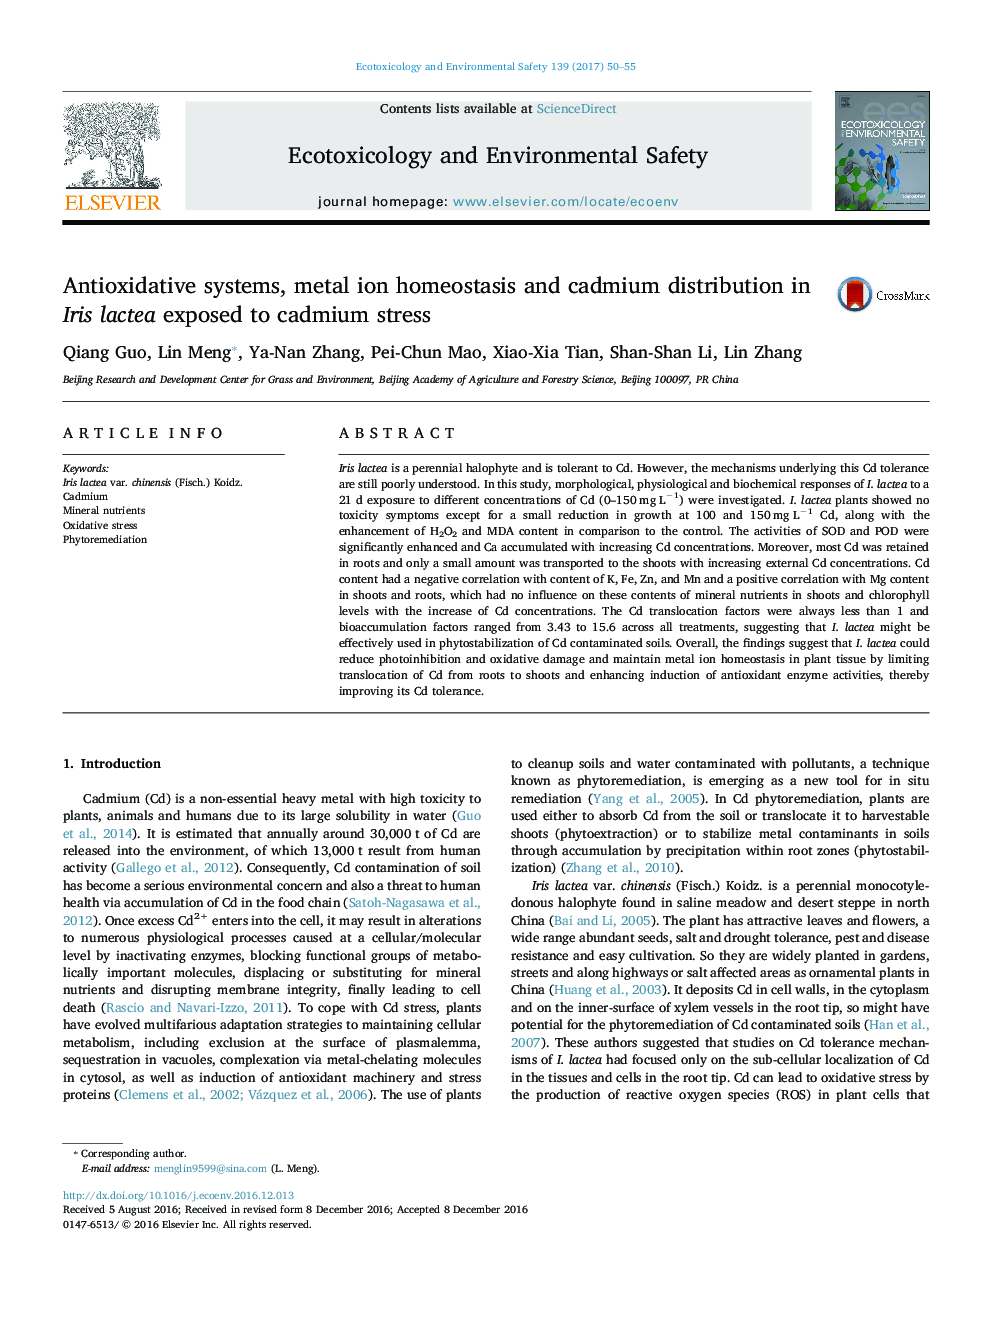 Antioxidative systems, metal ion homeostasis and cadmium distribution in Iris lactea exposed to cadmium stress